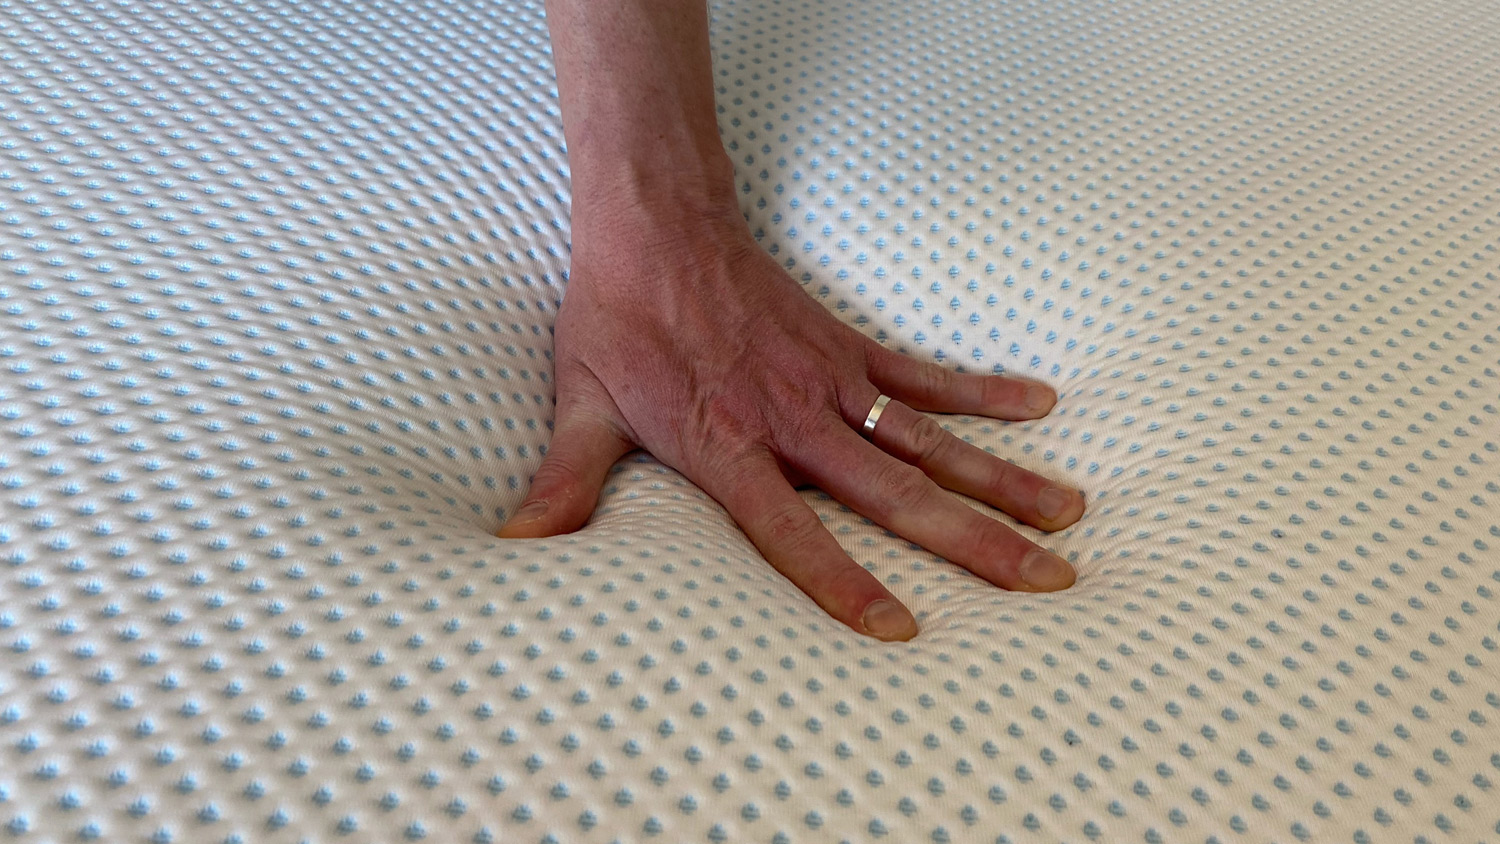 A hand pressing down on the Amerisleep AS3 Hybrid mattress